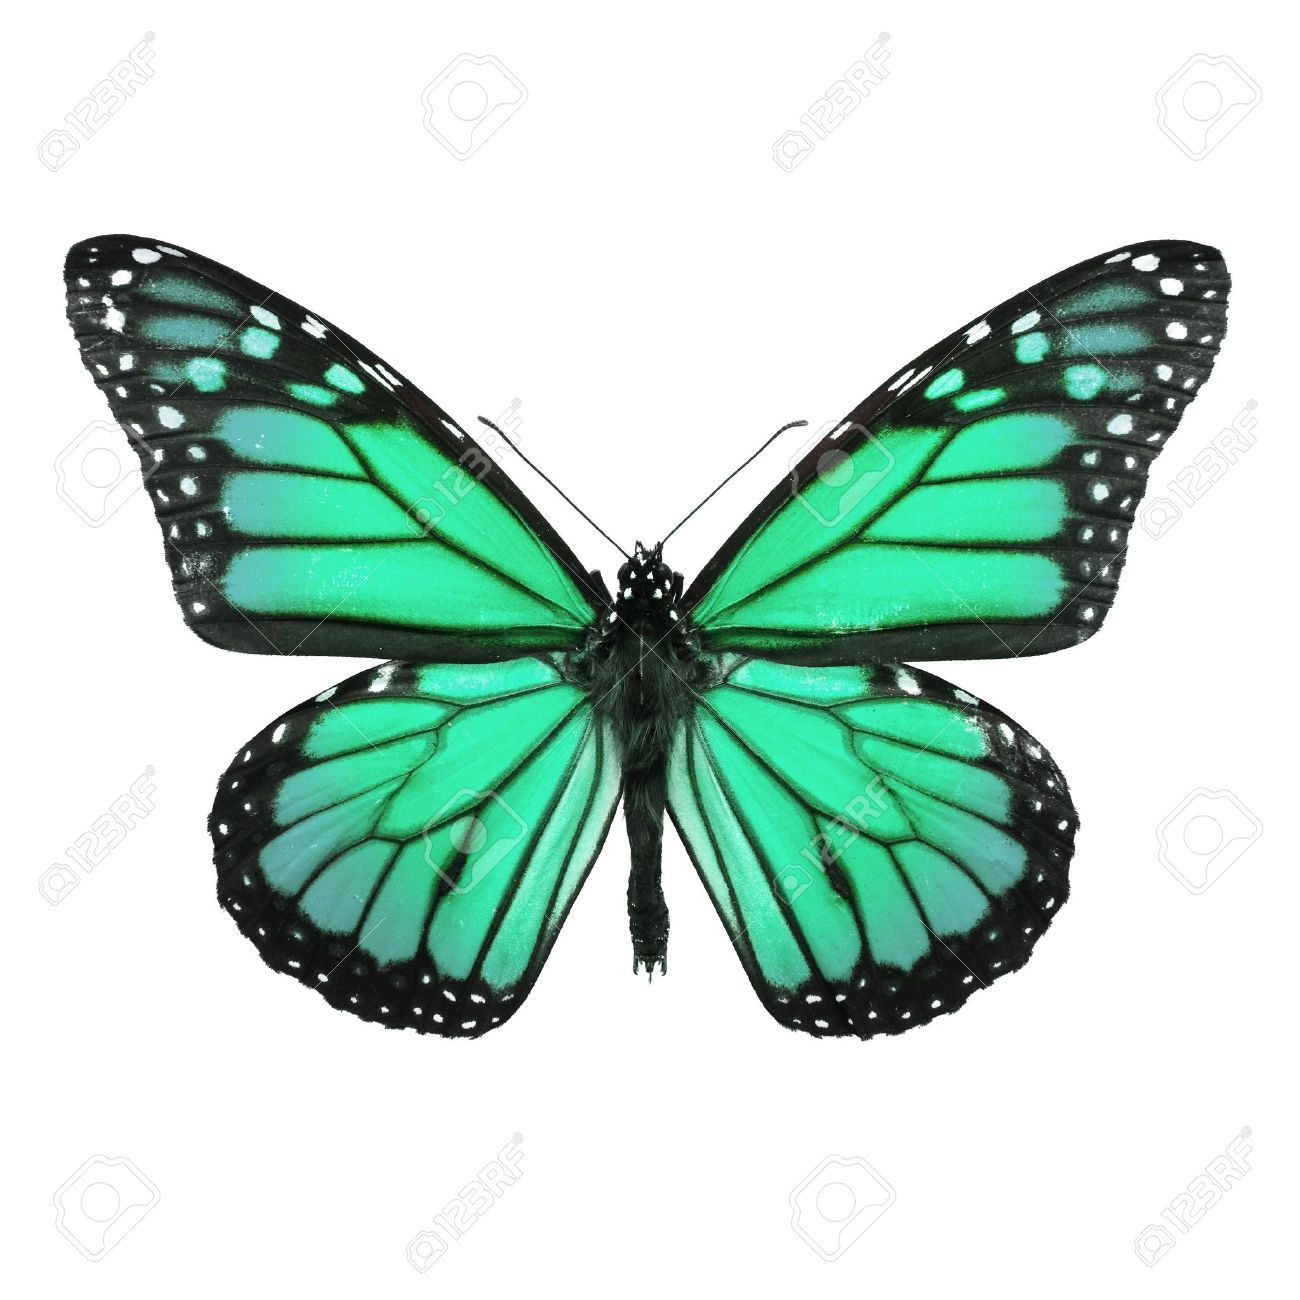 Imagem Relacionada Butterflies Green Butterfly Butterfly in proportions 1300 X 1300